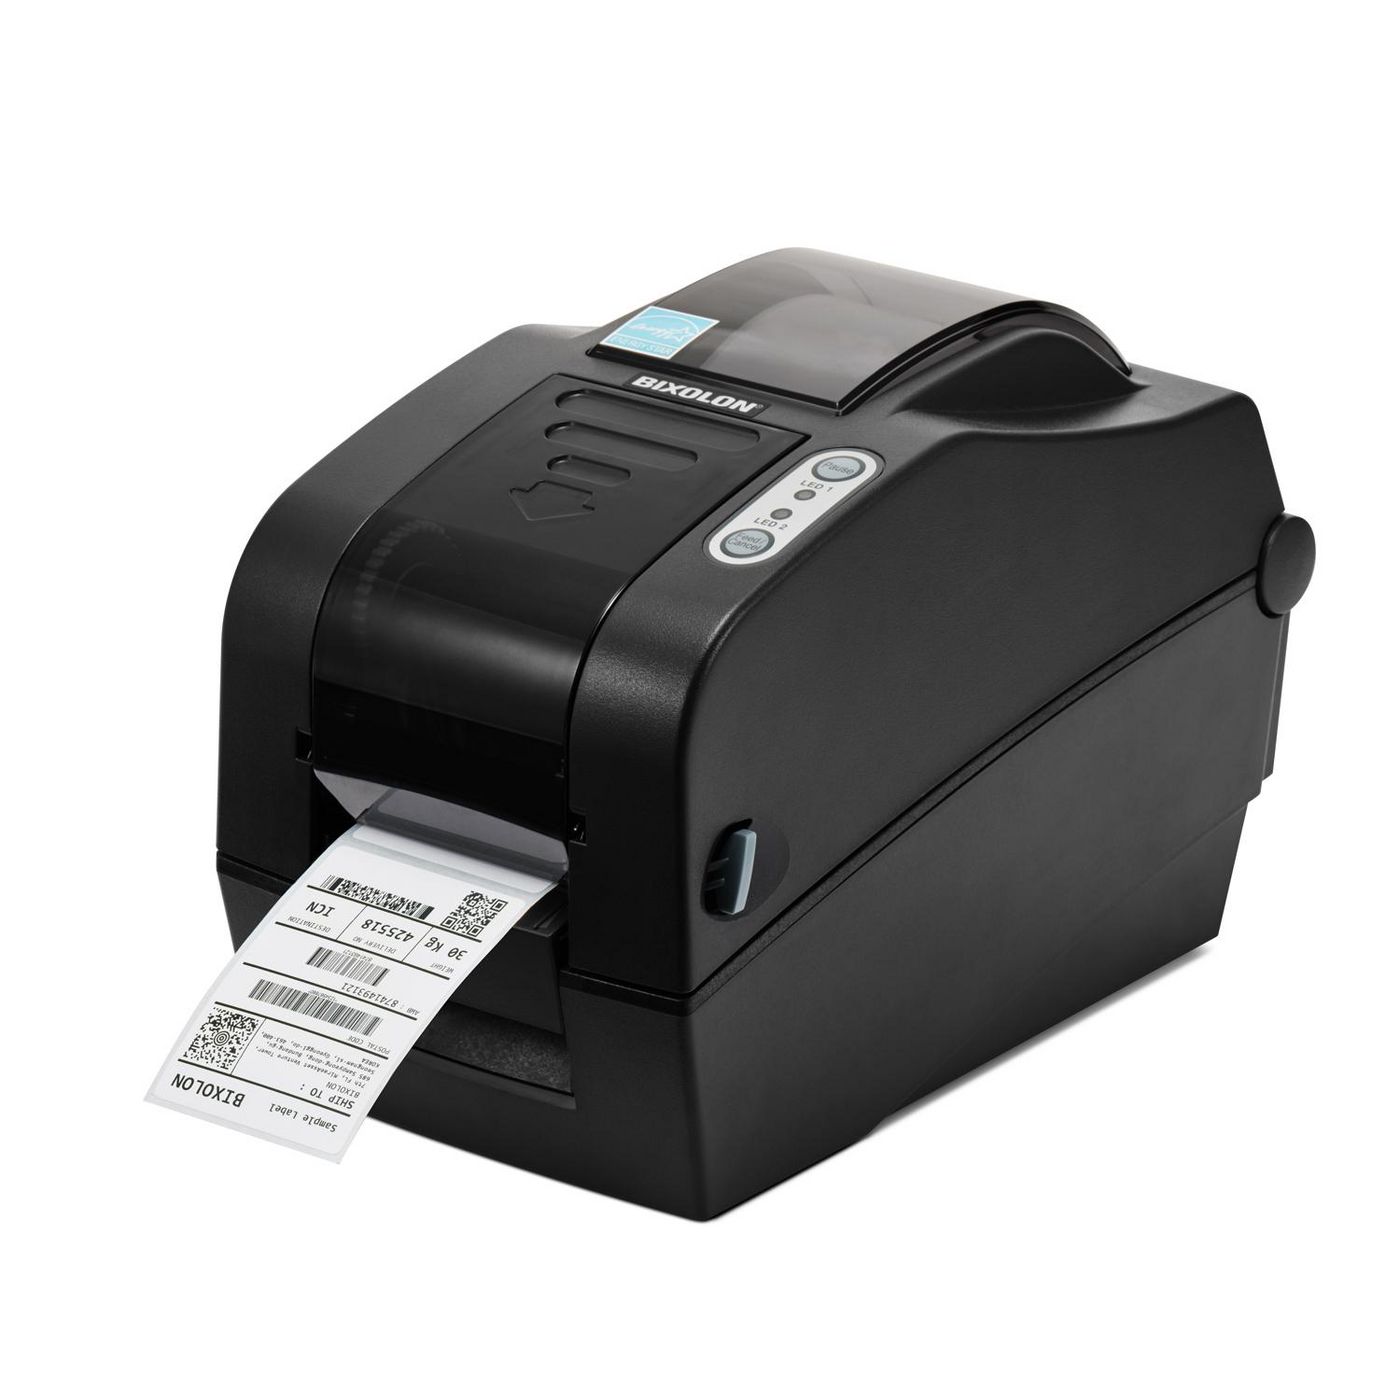 Slp-tx223deg - Label Printer - Direct Thermal - USB / Serial / Parallel